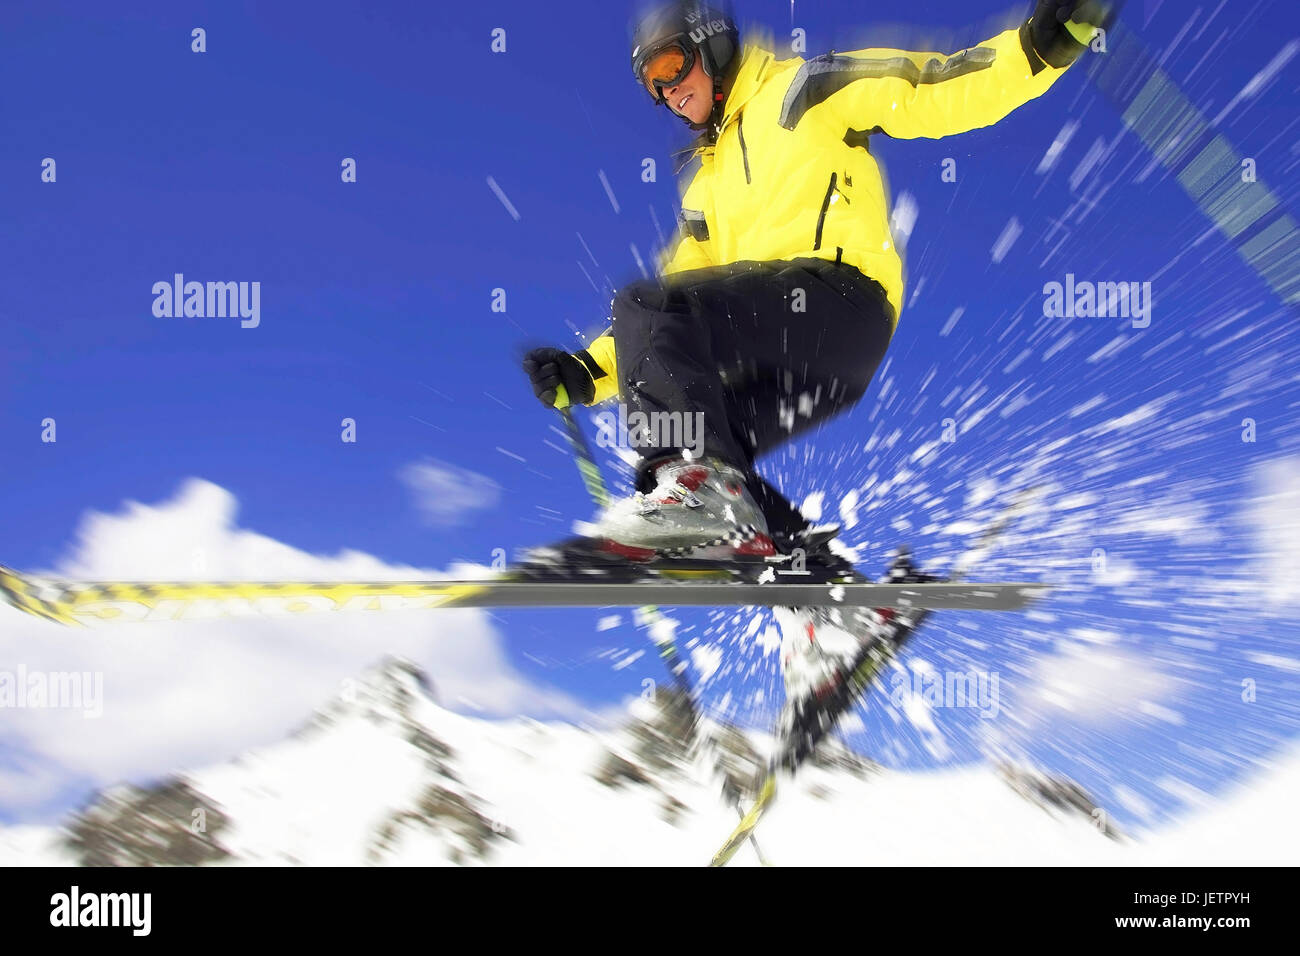 Skiing - skiing - trend sport, Skiing - Skifahren - Trendsport Stock Photo